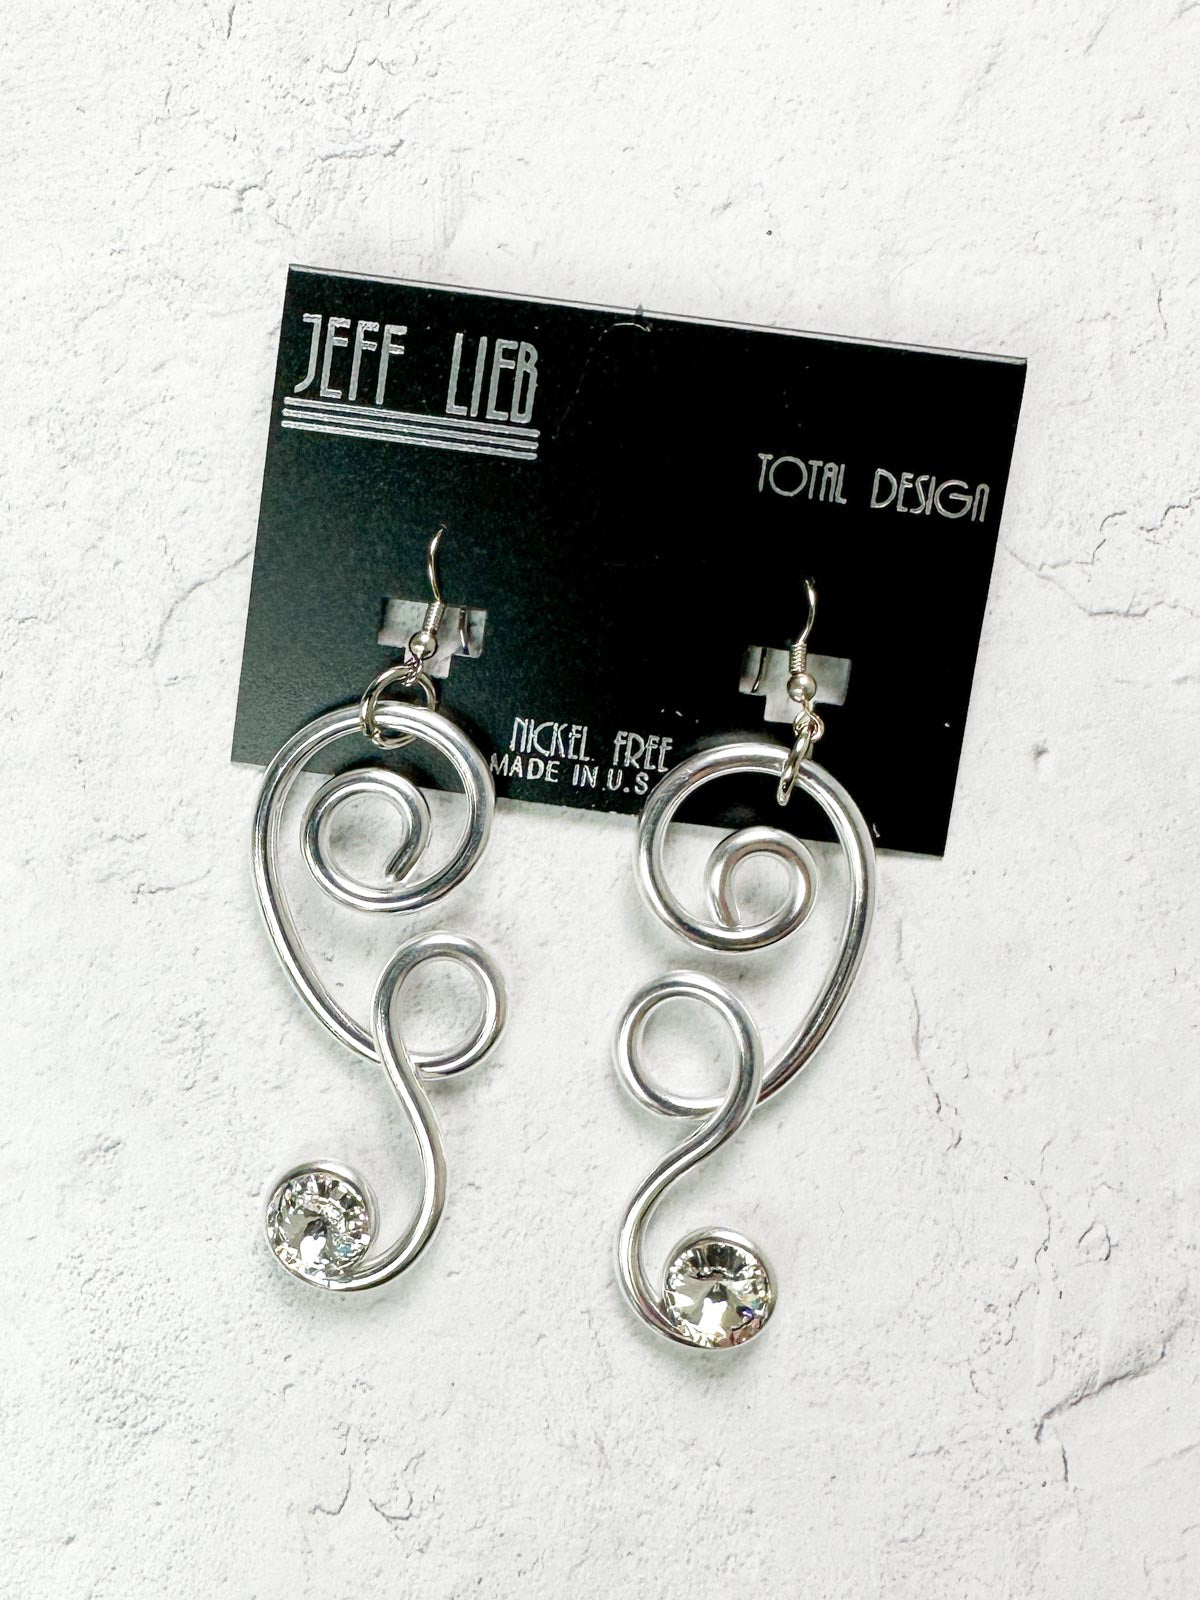 Jeff Lieb Total Design Jewelry Crystal &amp; Wire Swirl Drop Earrings, Silver - Statement Boutique